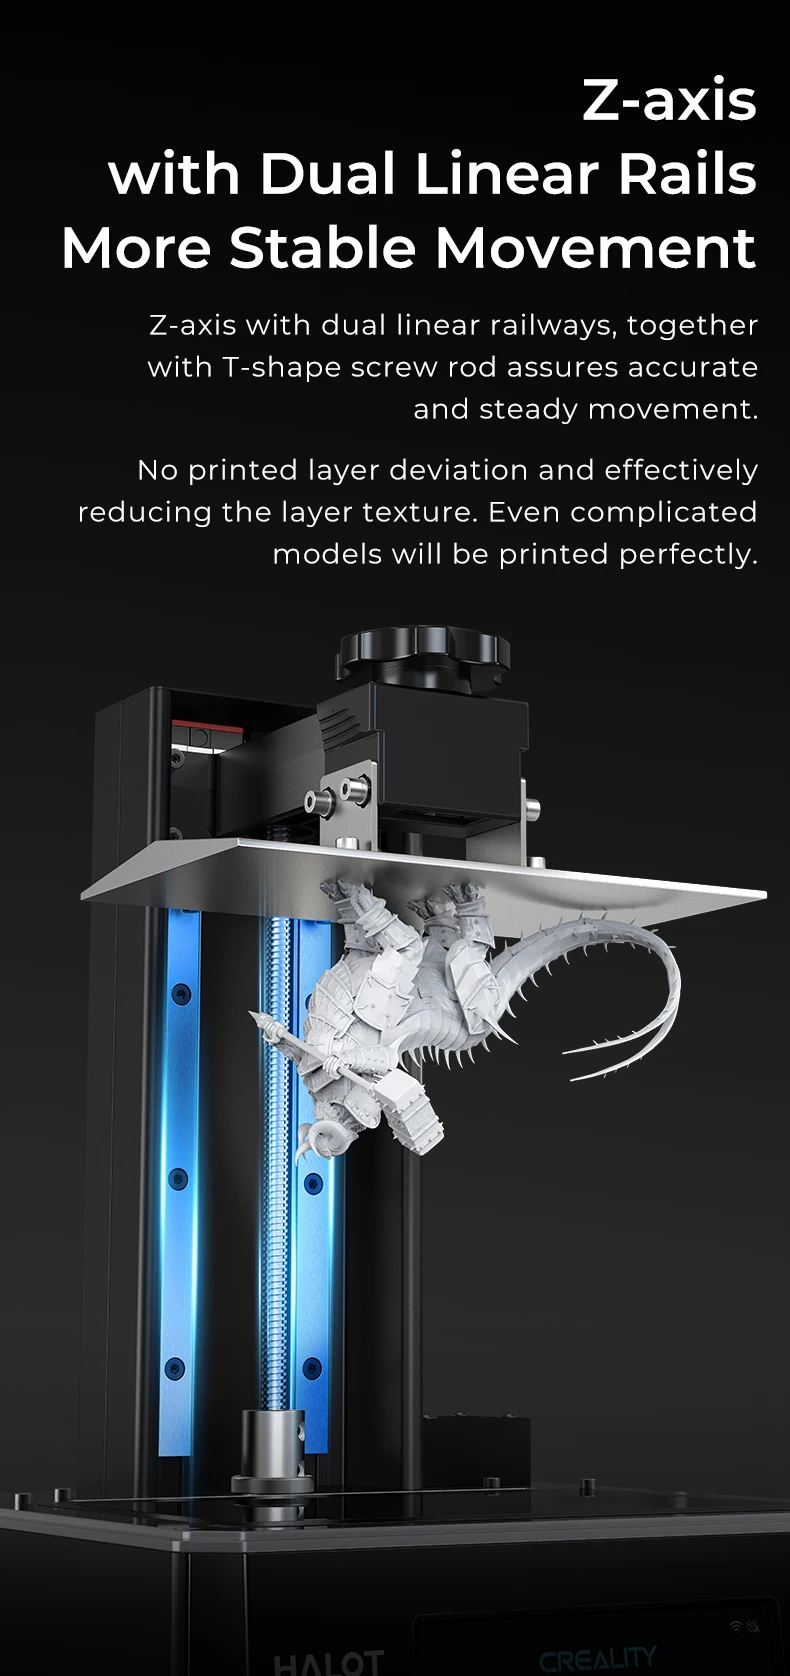 Creality HALOT-ONE PLUS 3D Resin Printer 7.9-inch 4K Mono LCD